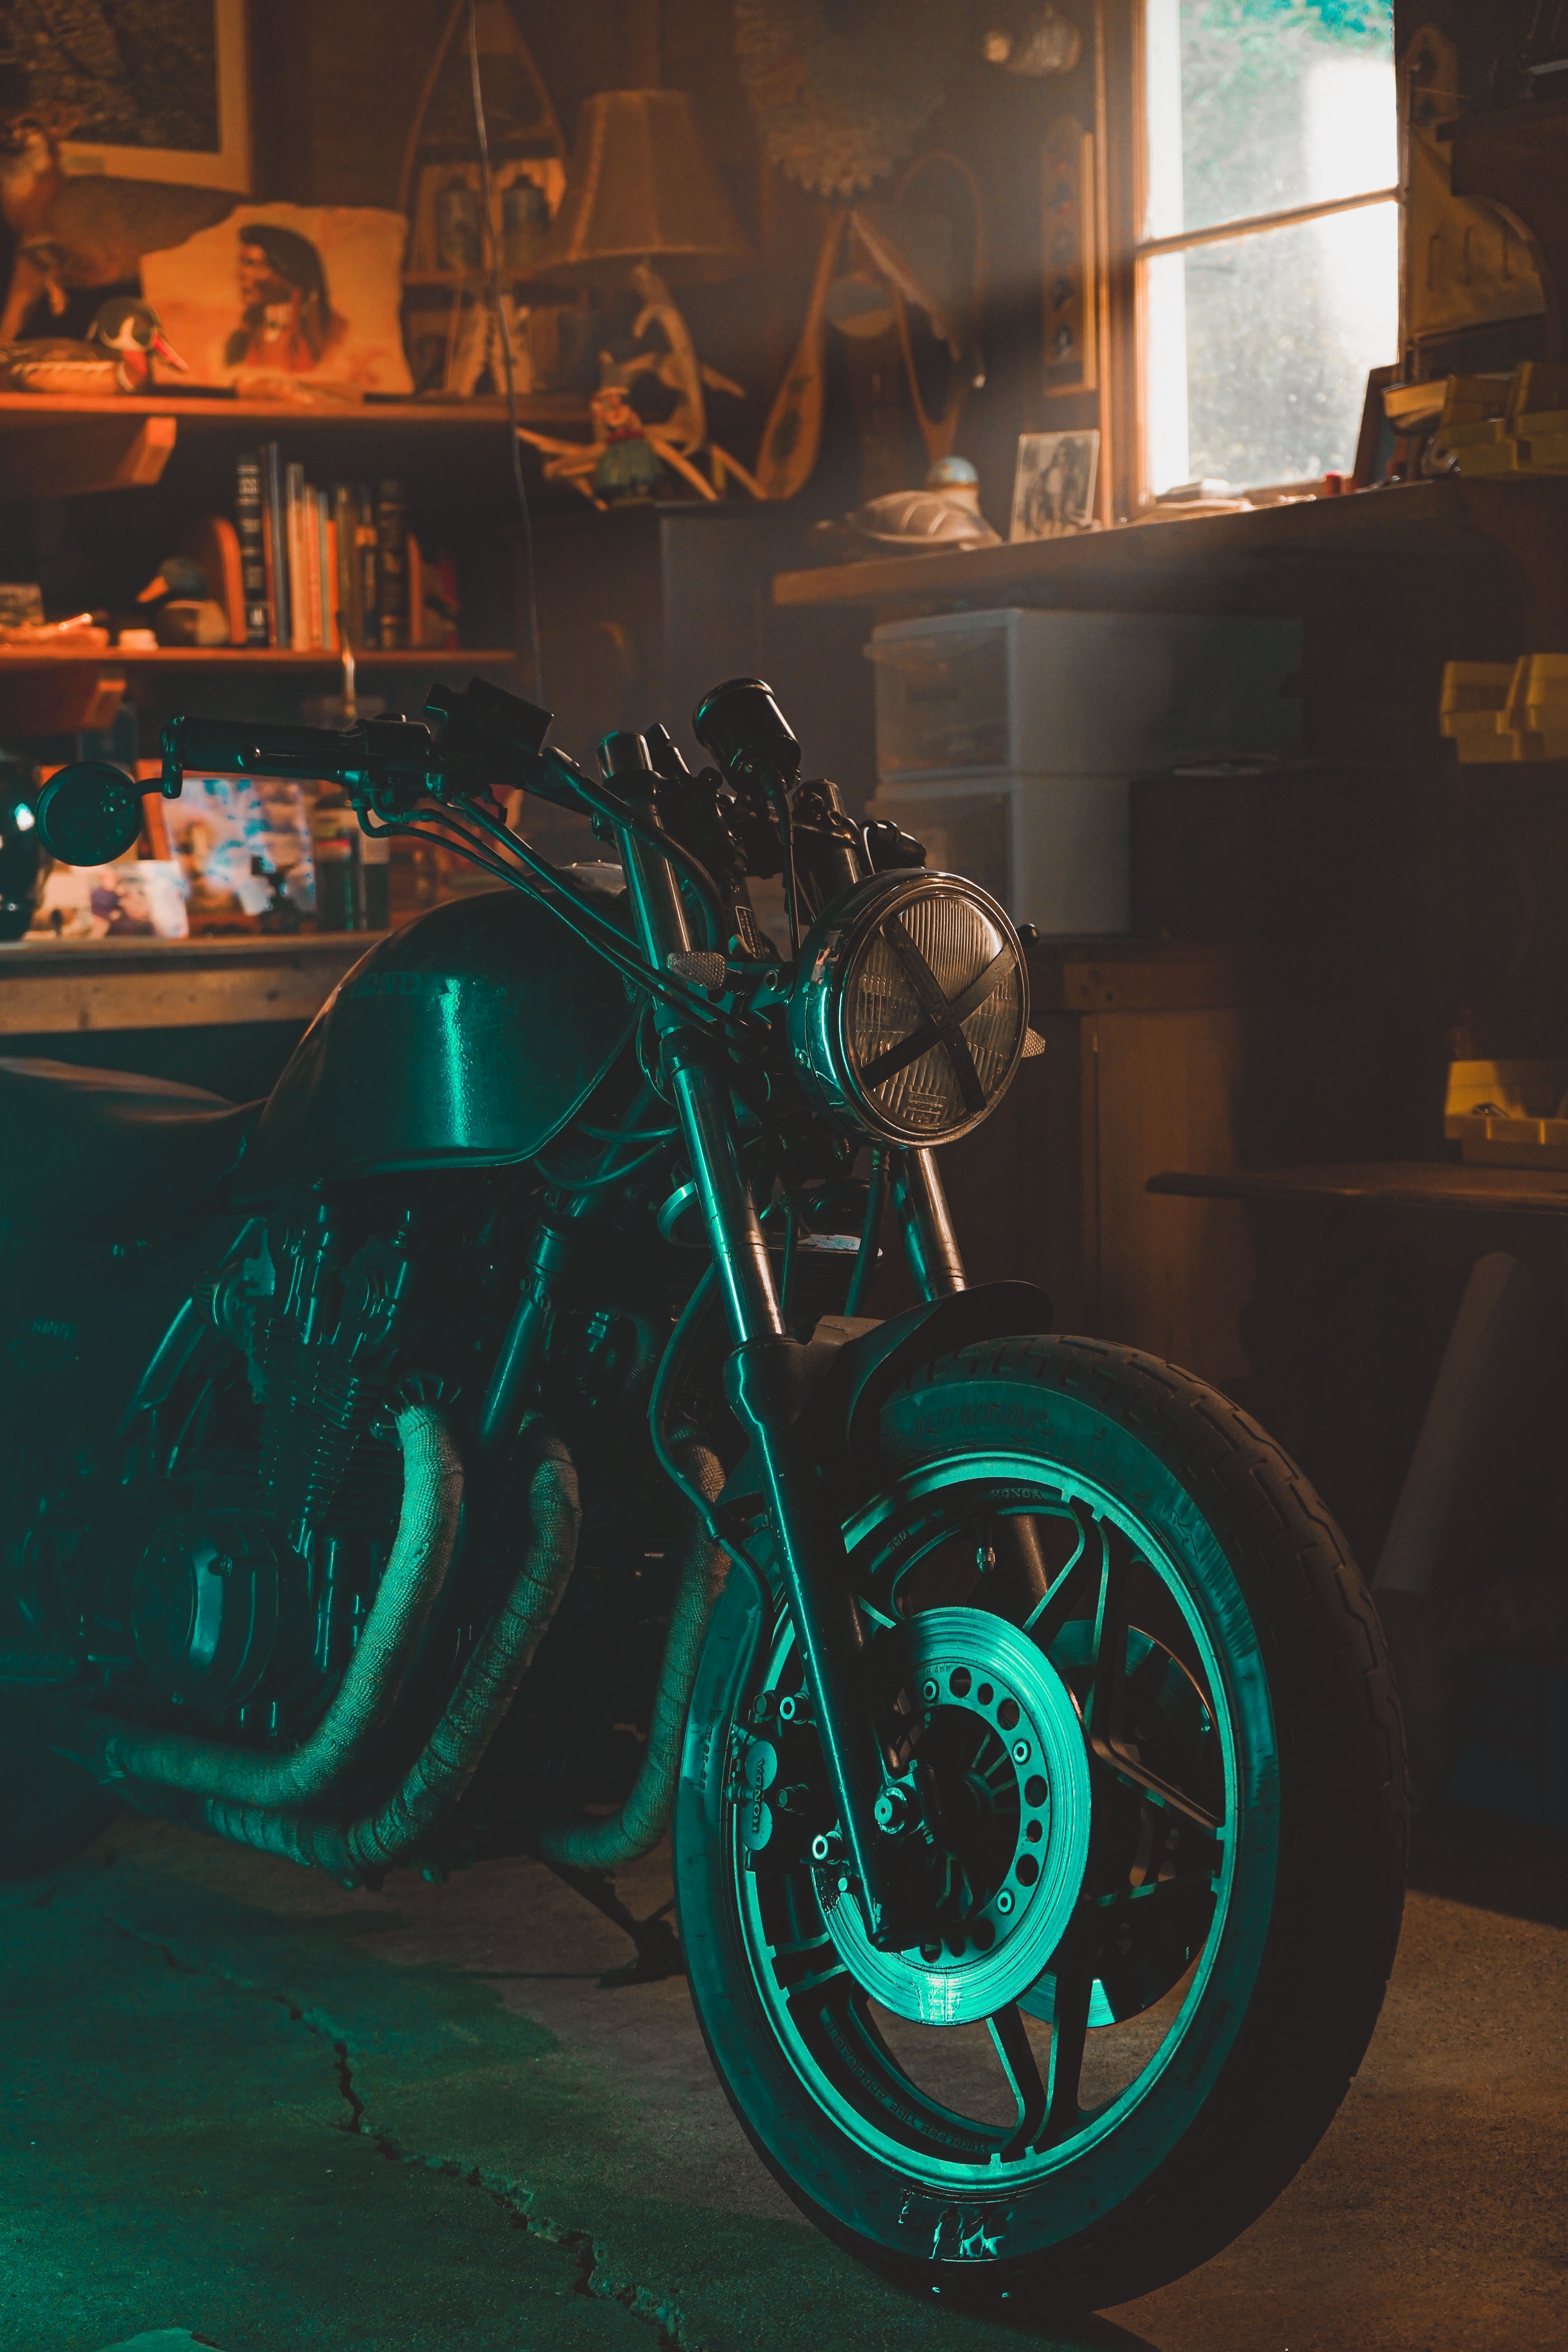 126989 descargar imagen motocicletas, vista lateral, perfil, motocicleta, bicicleta, garaje: fondos de pantalla y protectores de pantalla gratis